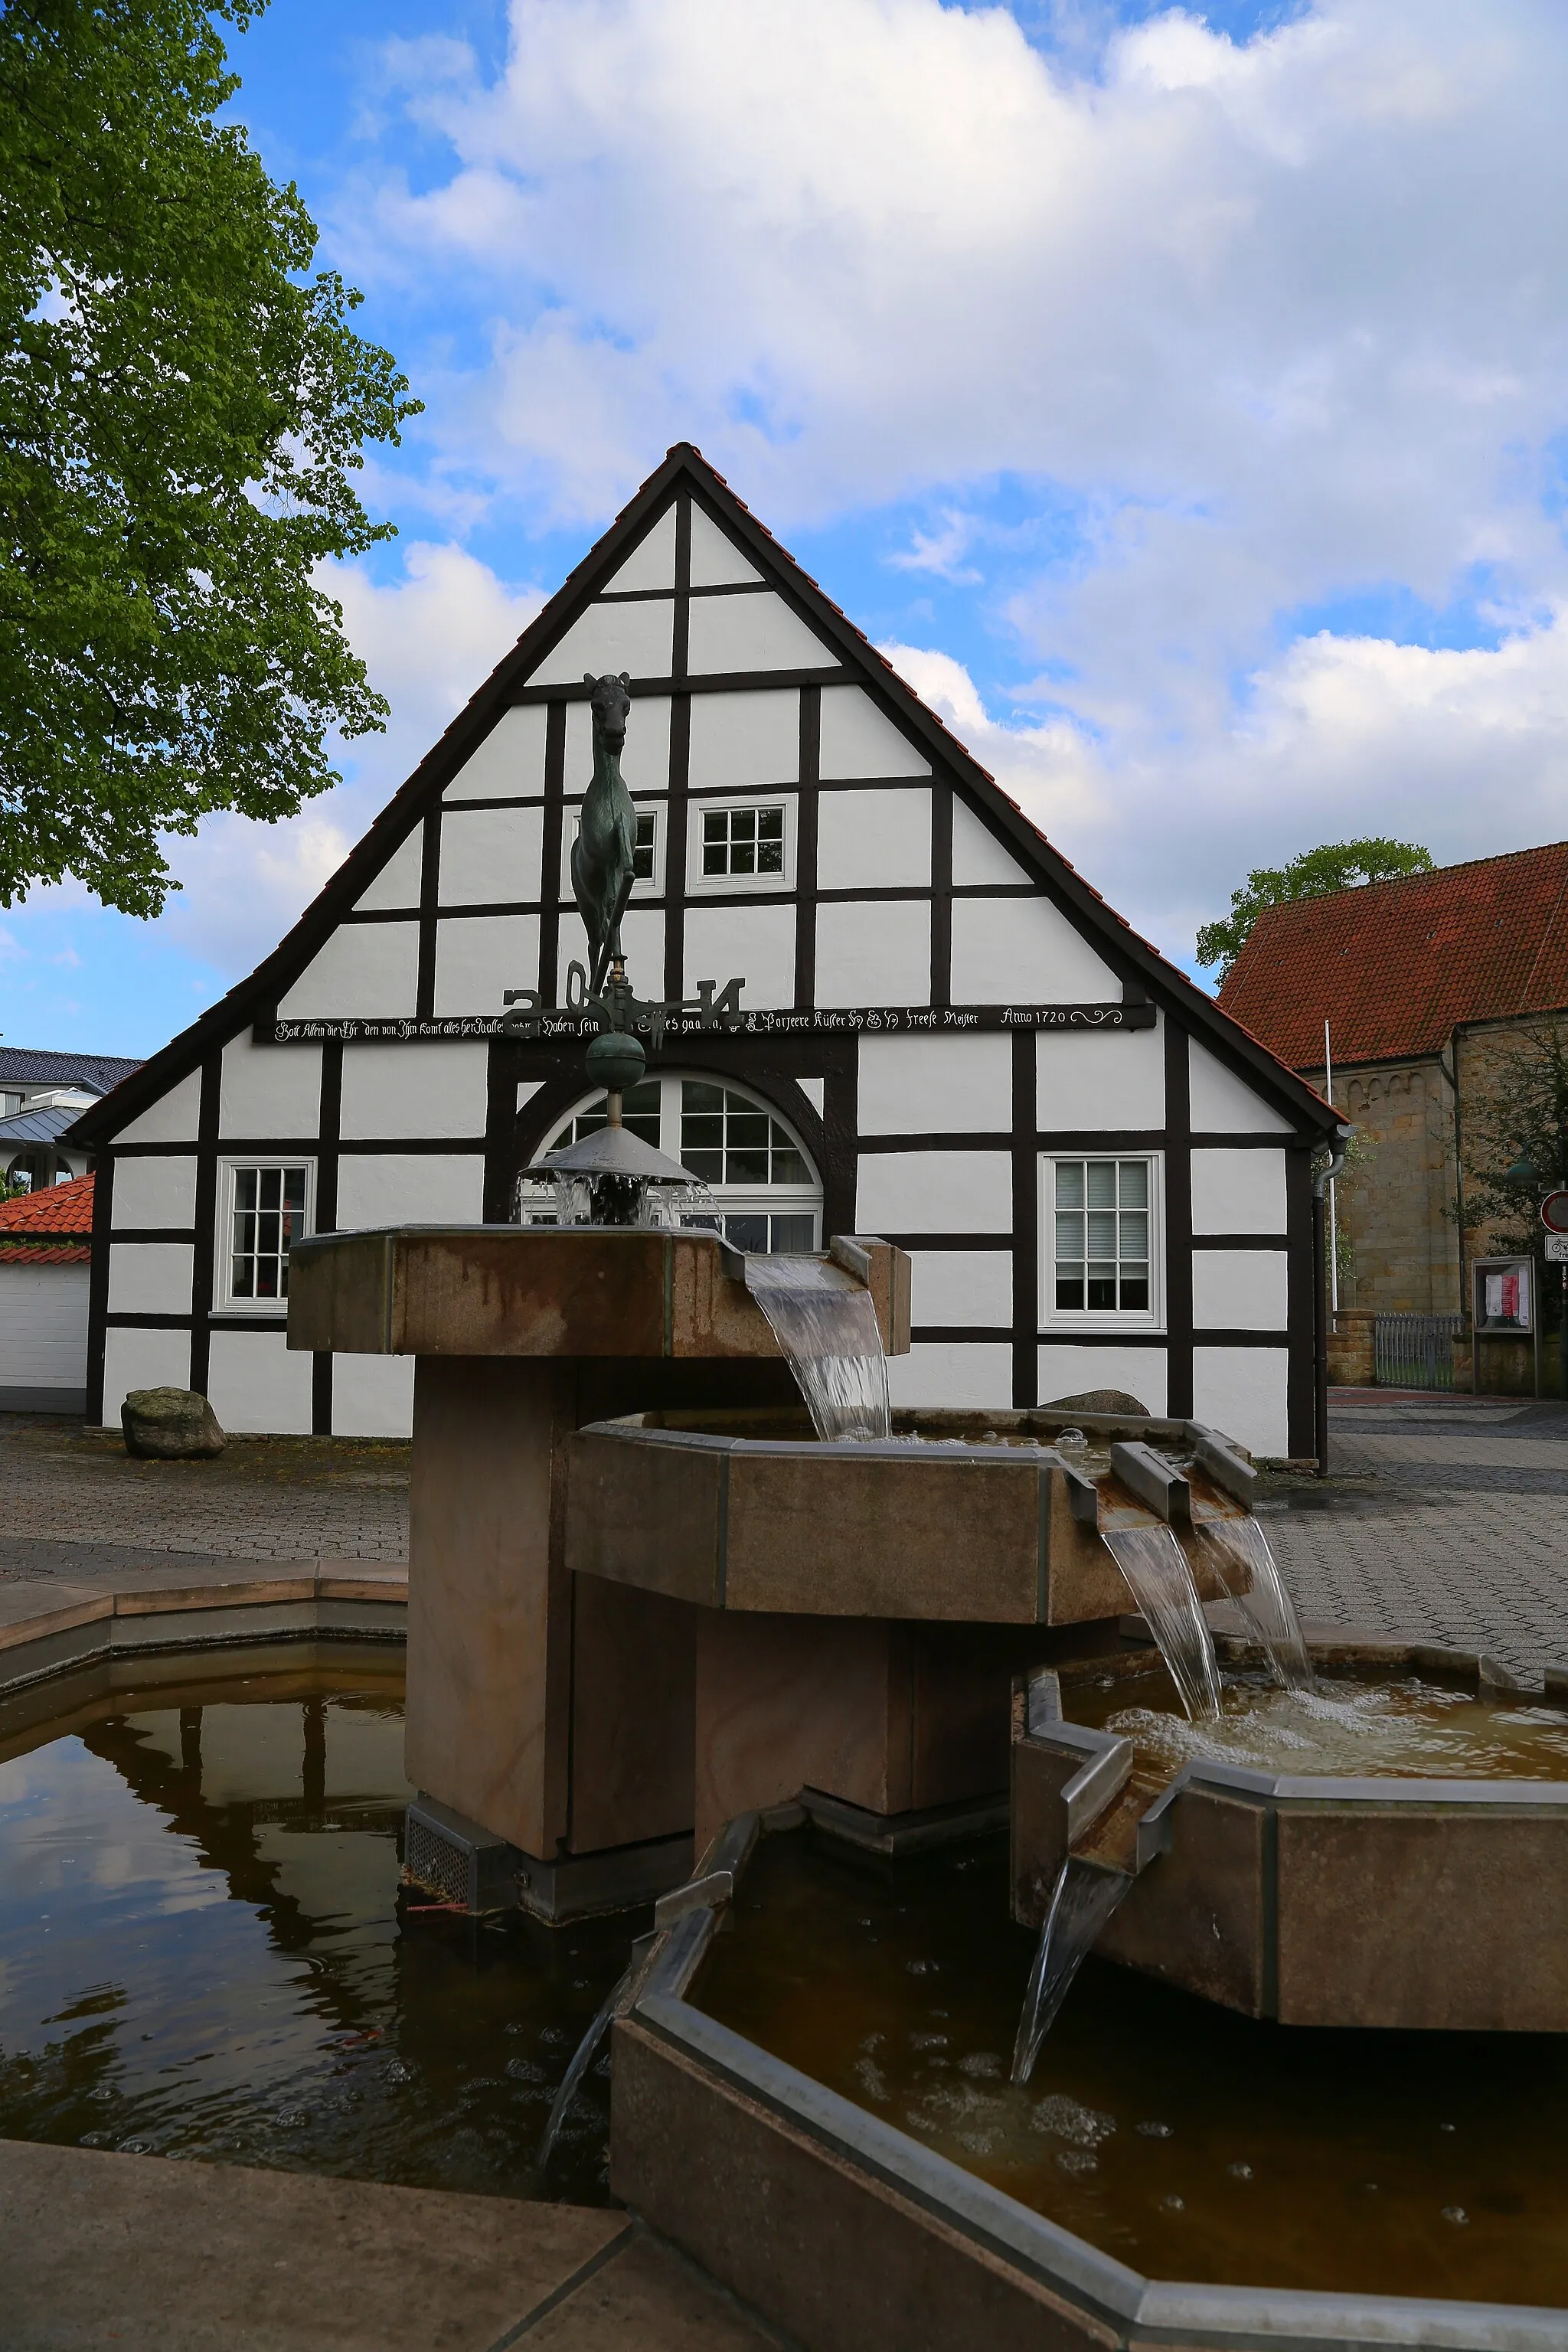 Photo showing: Market square fountain in Recke, Kreis Steinfurt, North Rhine-Westphalia, Germany.